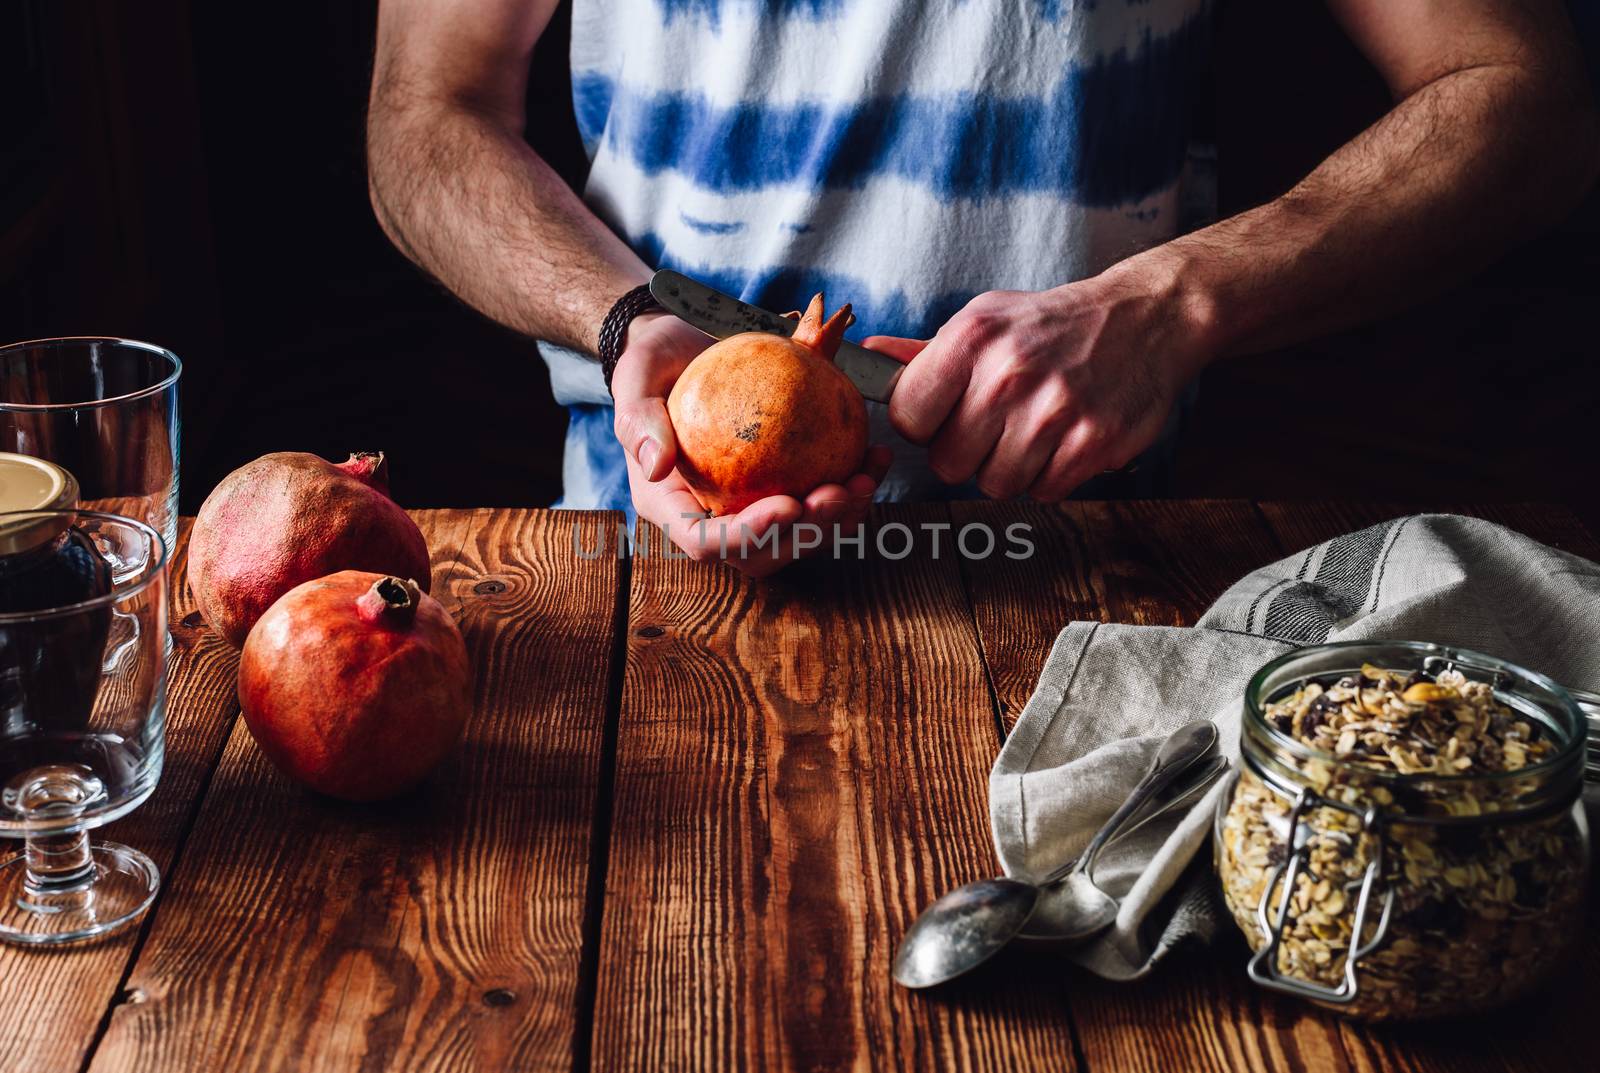 Man Opens Pomegranate with a Knife. by Seva_blsv